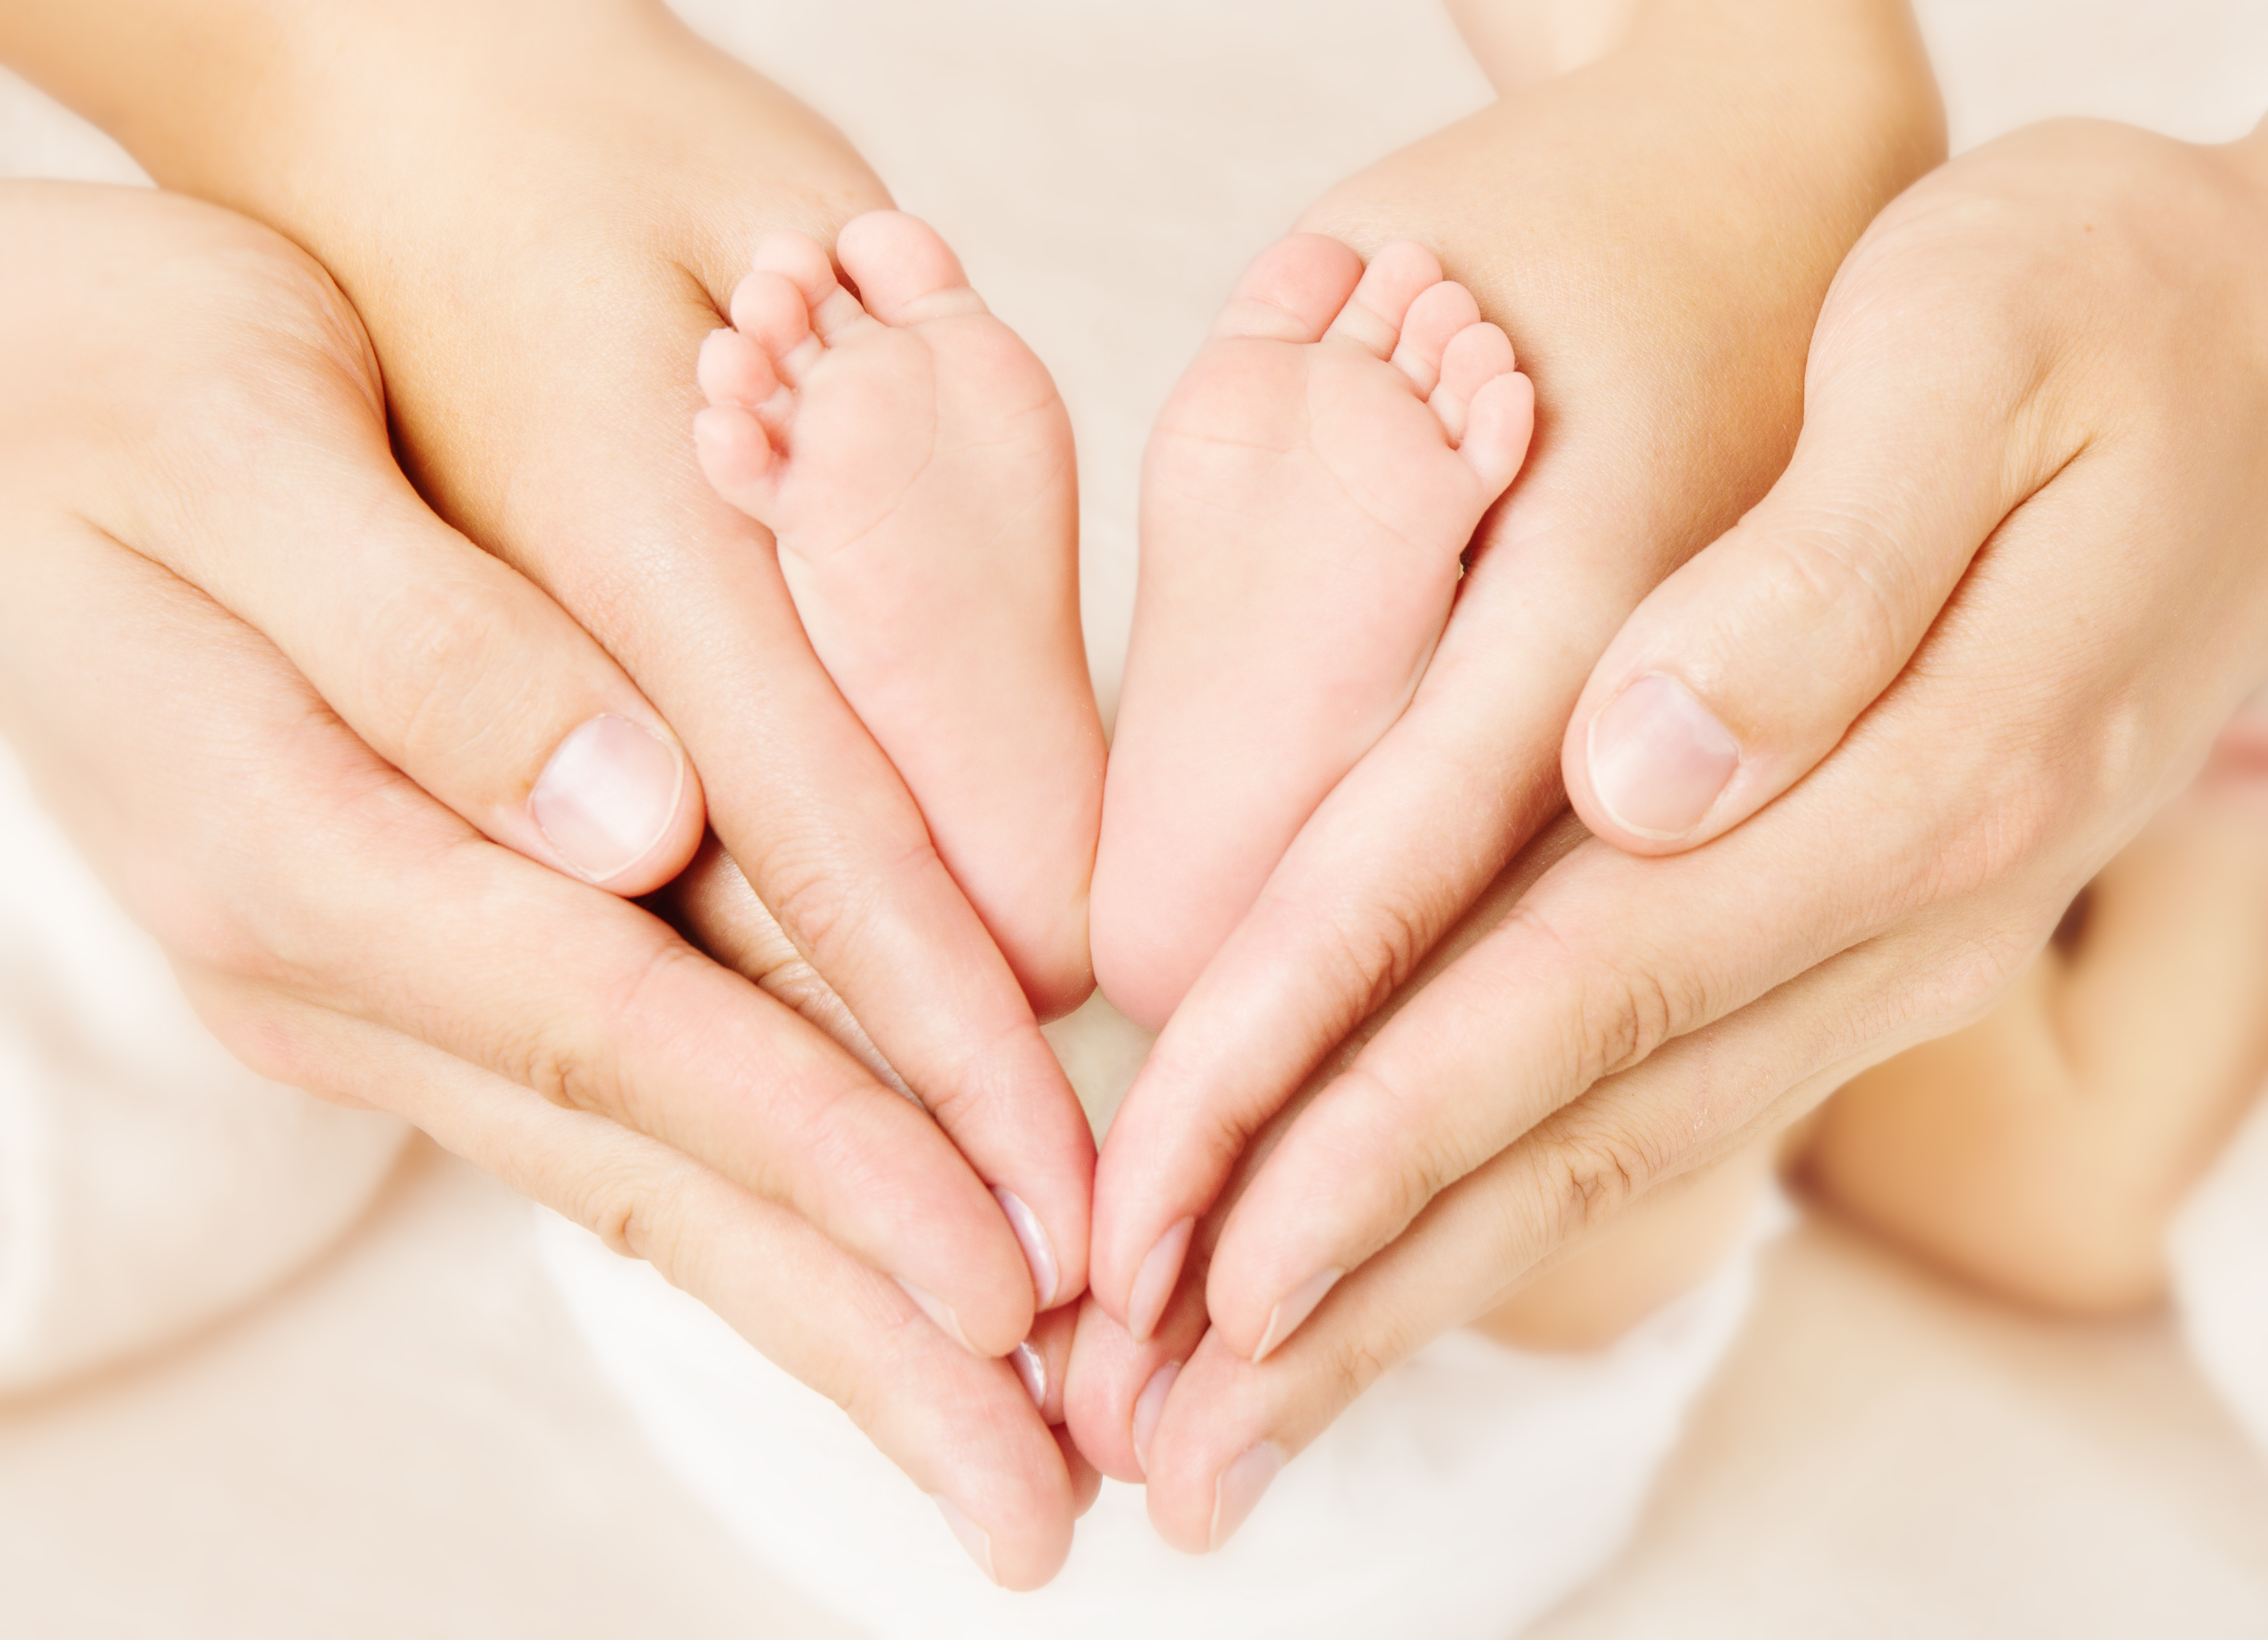 Мама день ноги. Пяточки младенца в руках. Ножки ребенка в руках. Ножки ребенка в руках родителей. Ножки новорожденного ребенка в руках.